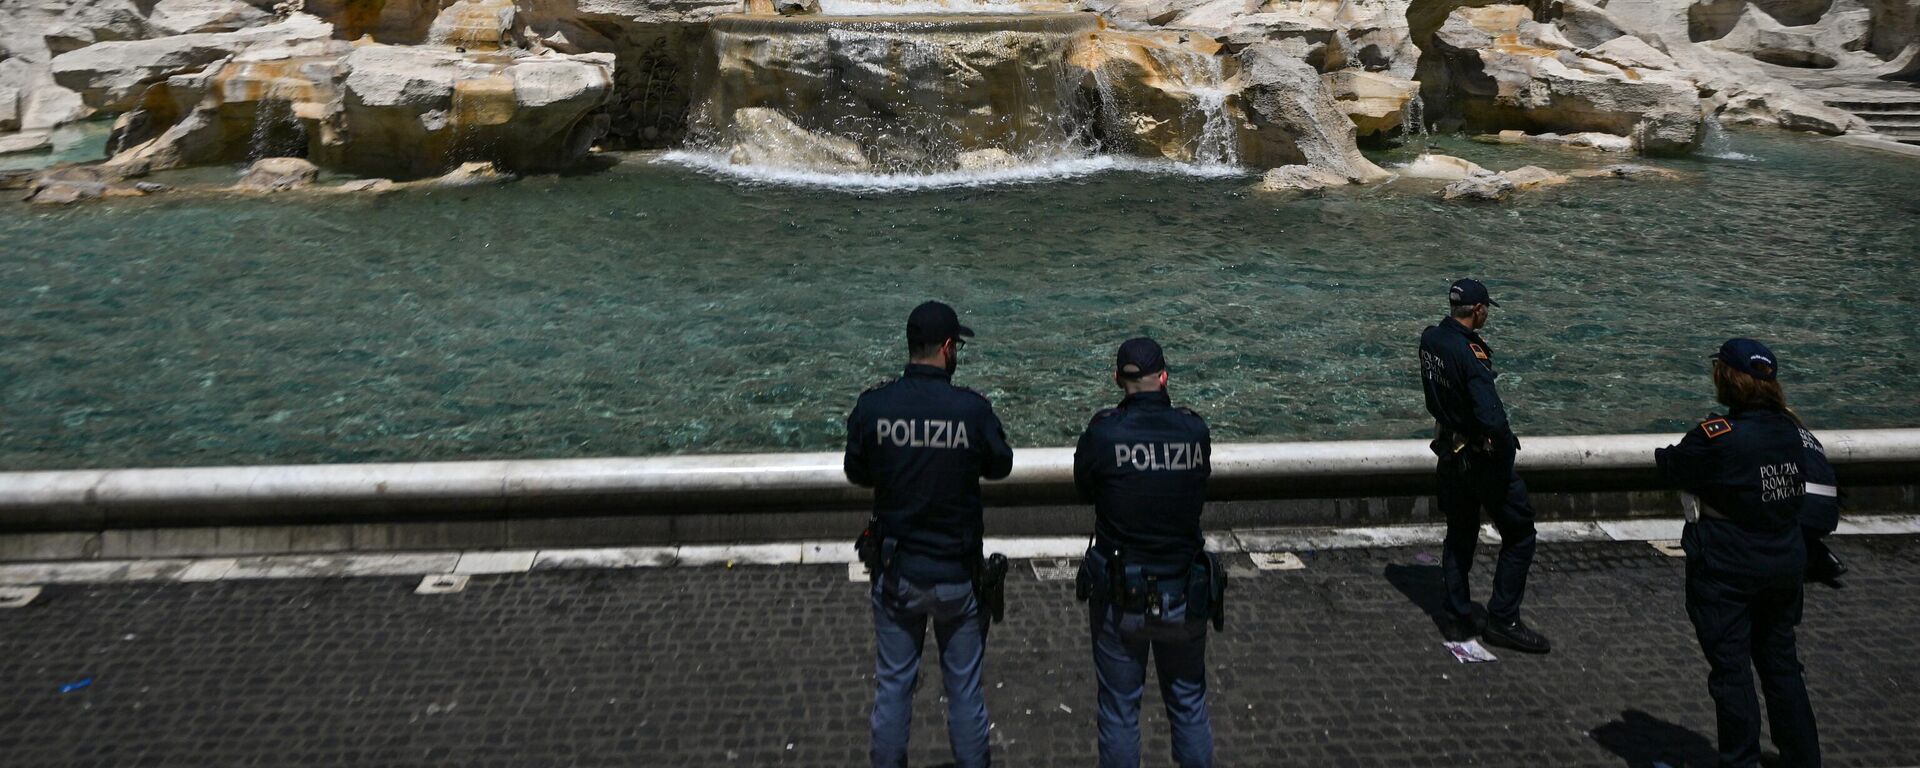 La policía monta guardia en la Fontana di Trevi, el 21 de mayo de 2023 - Sputnik Mundo, 1920, 21.05.2023